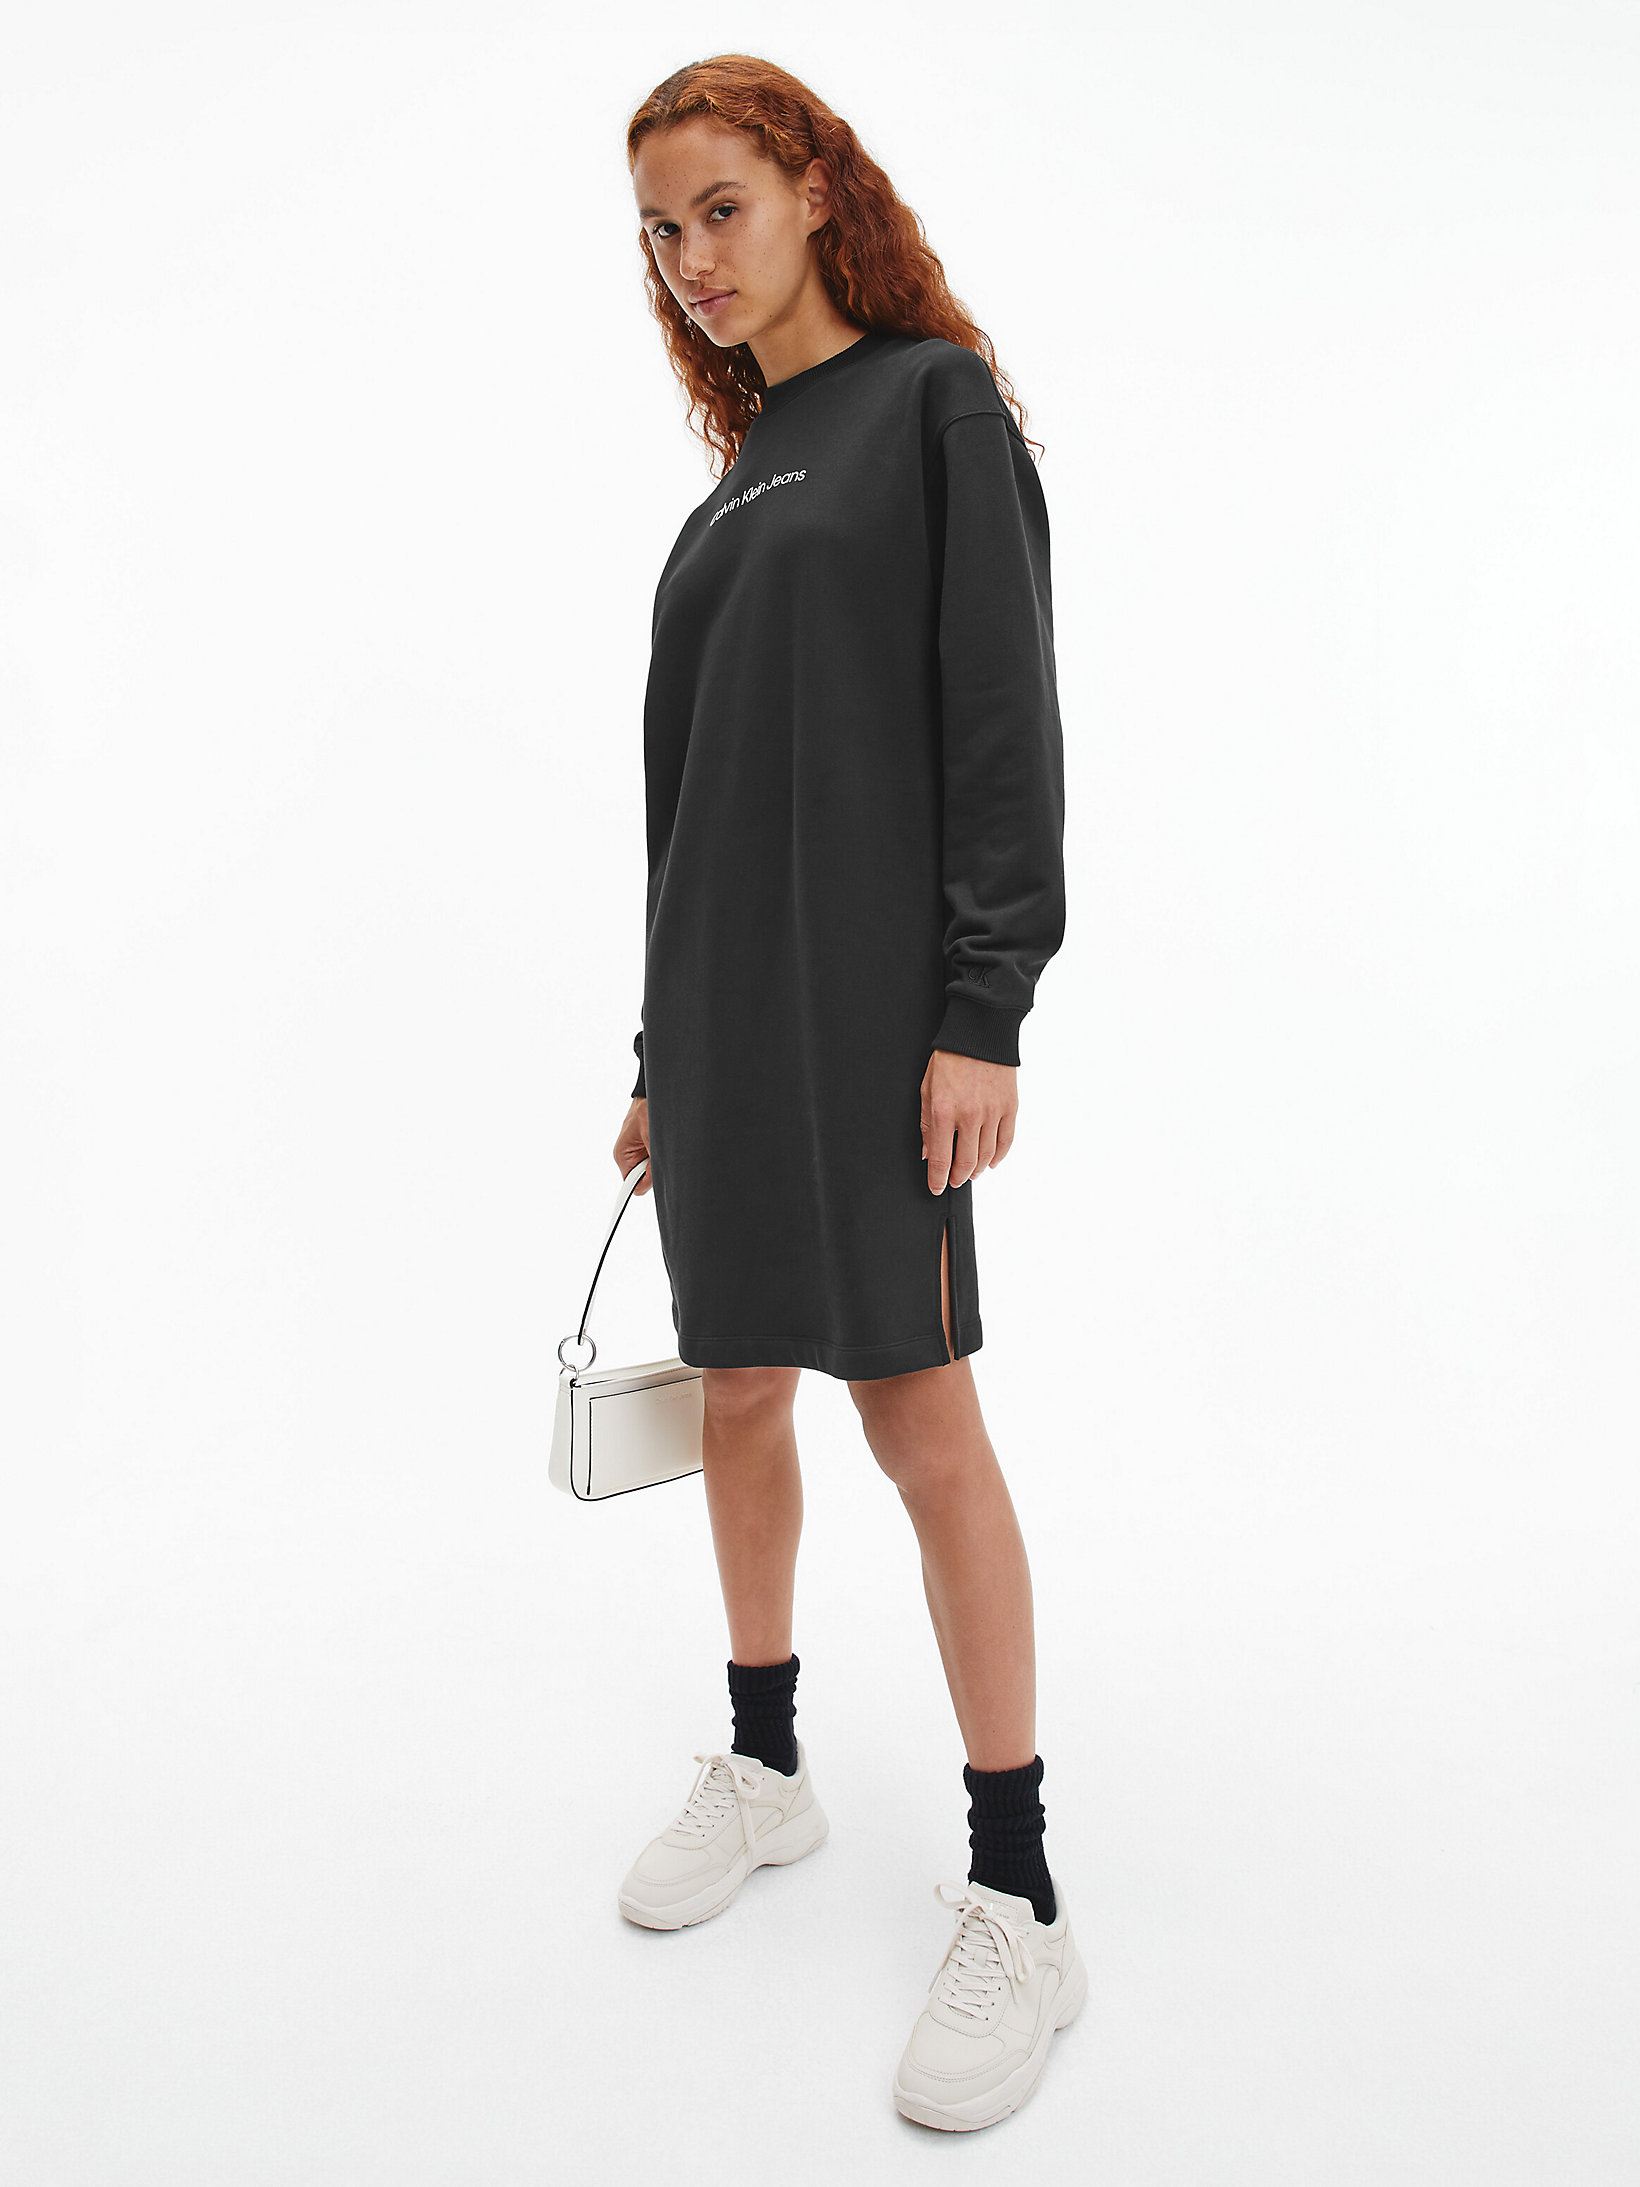 CK Black Relaxed Logo Sweatshirt Dress undefined women Calvin Klein